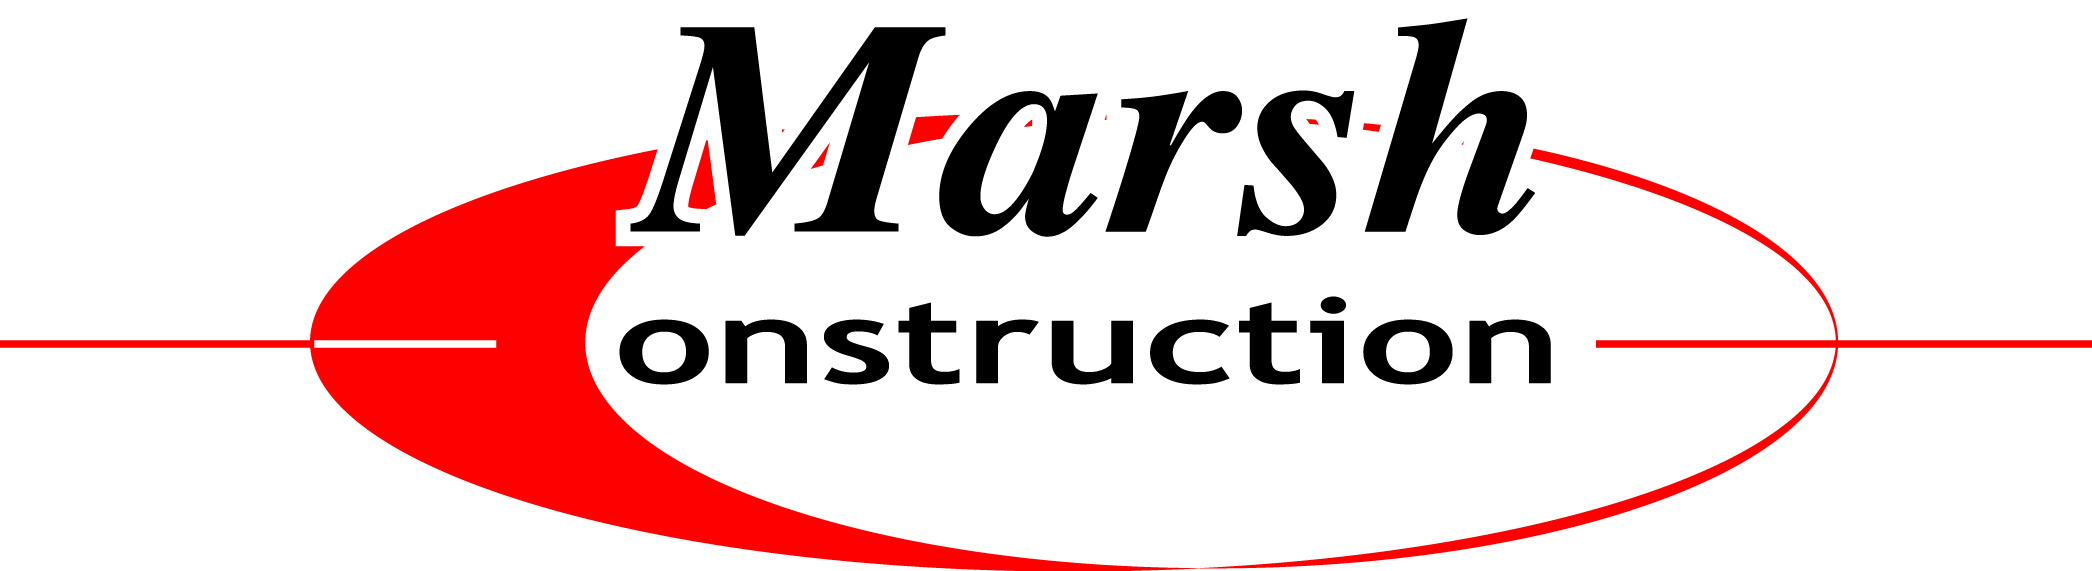 Marsh Construction Logo